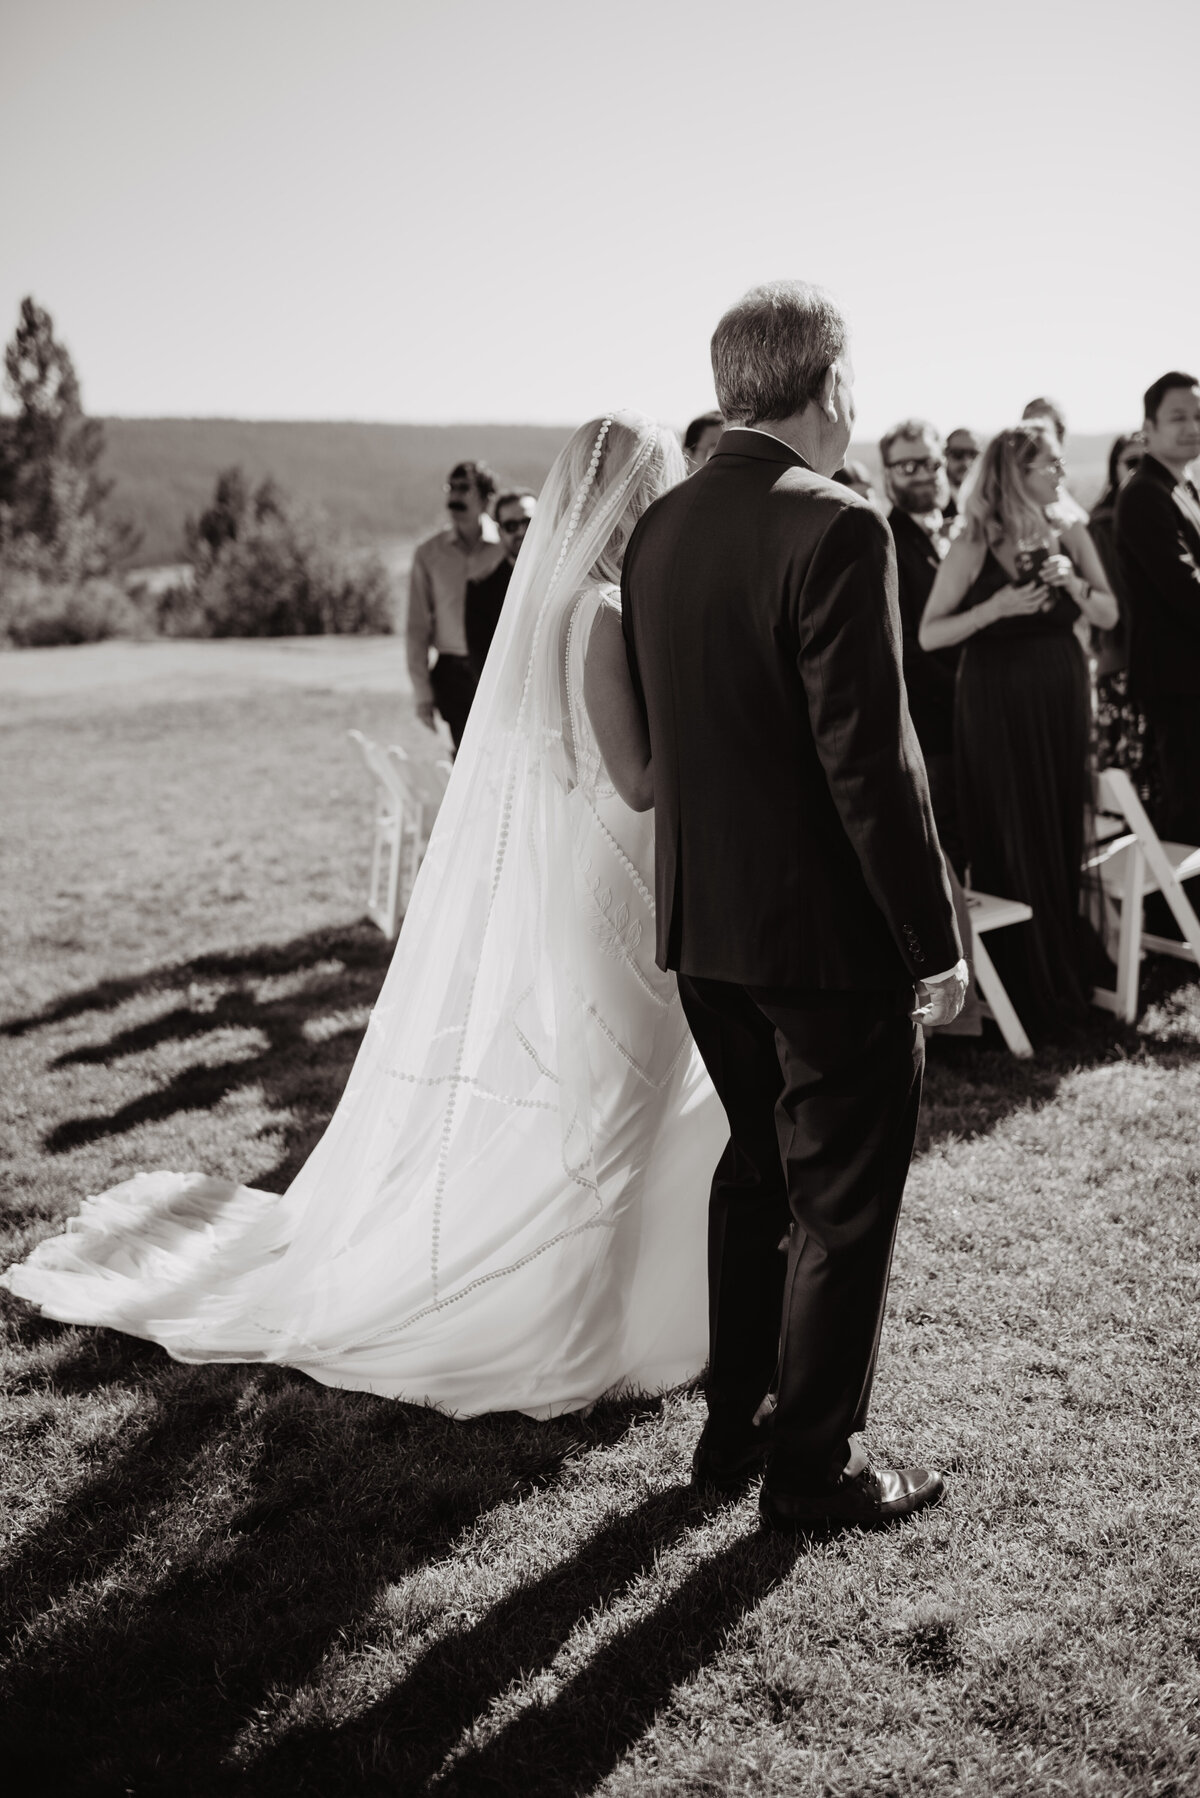 Photographers Jackson Hole capture bride walking down aisle in black and white portrait